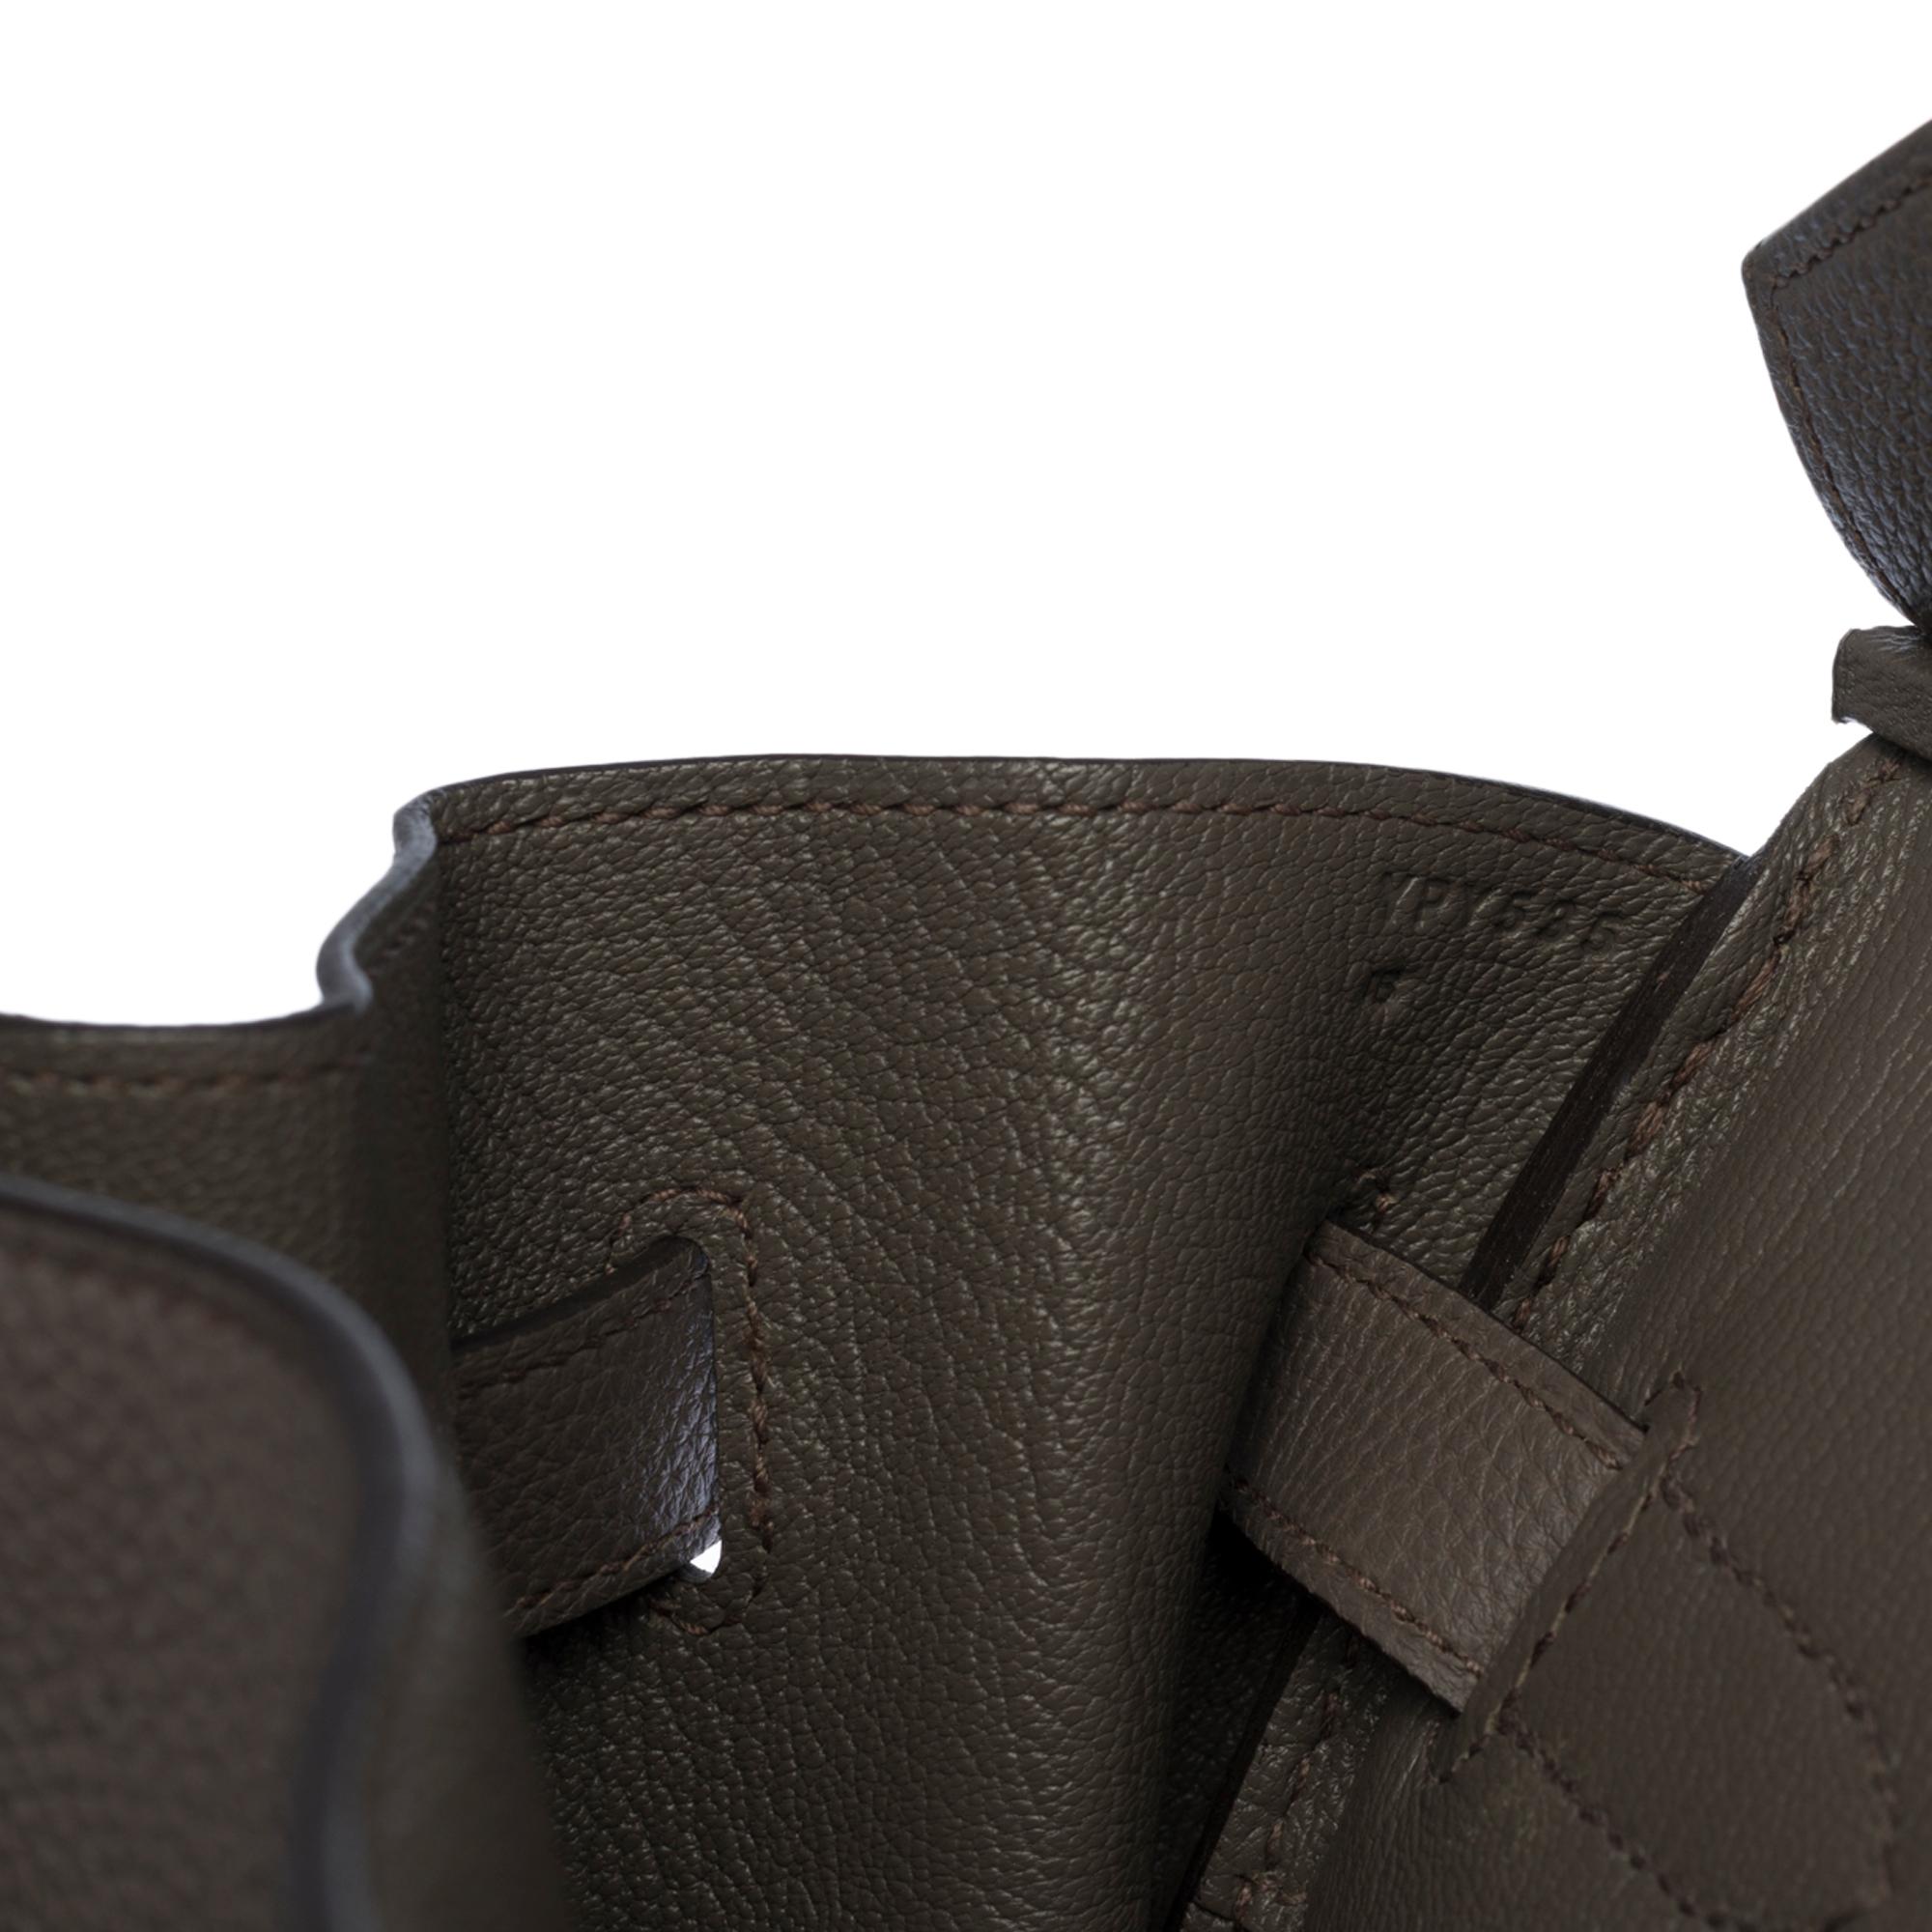 Almost New -Full set-Hermès Birkin 35 handbag in Etain Togo leather, SHW 1